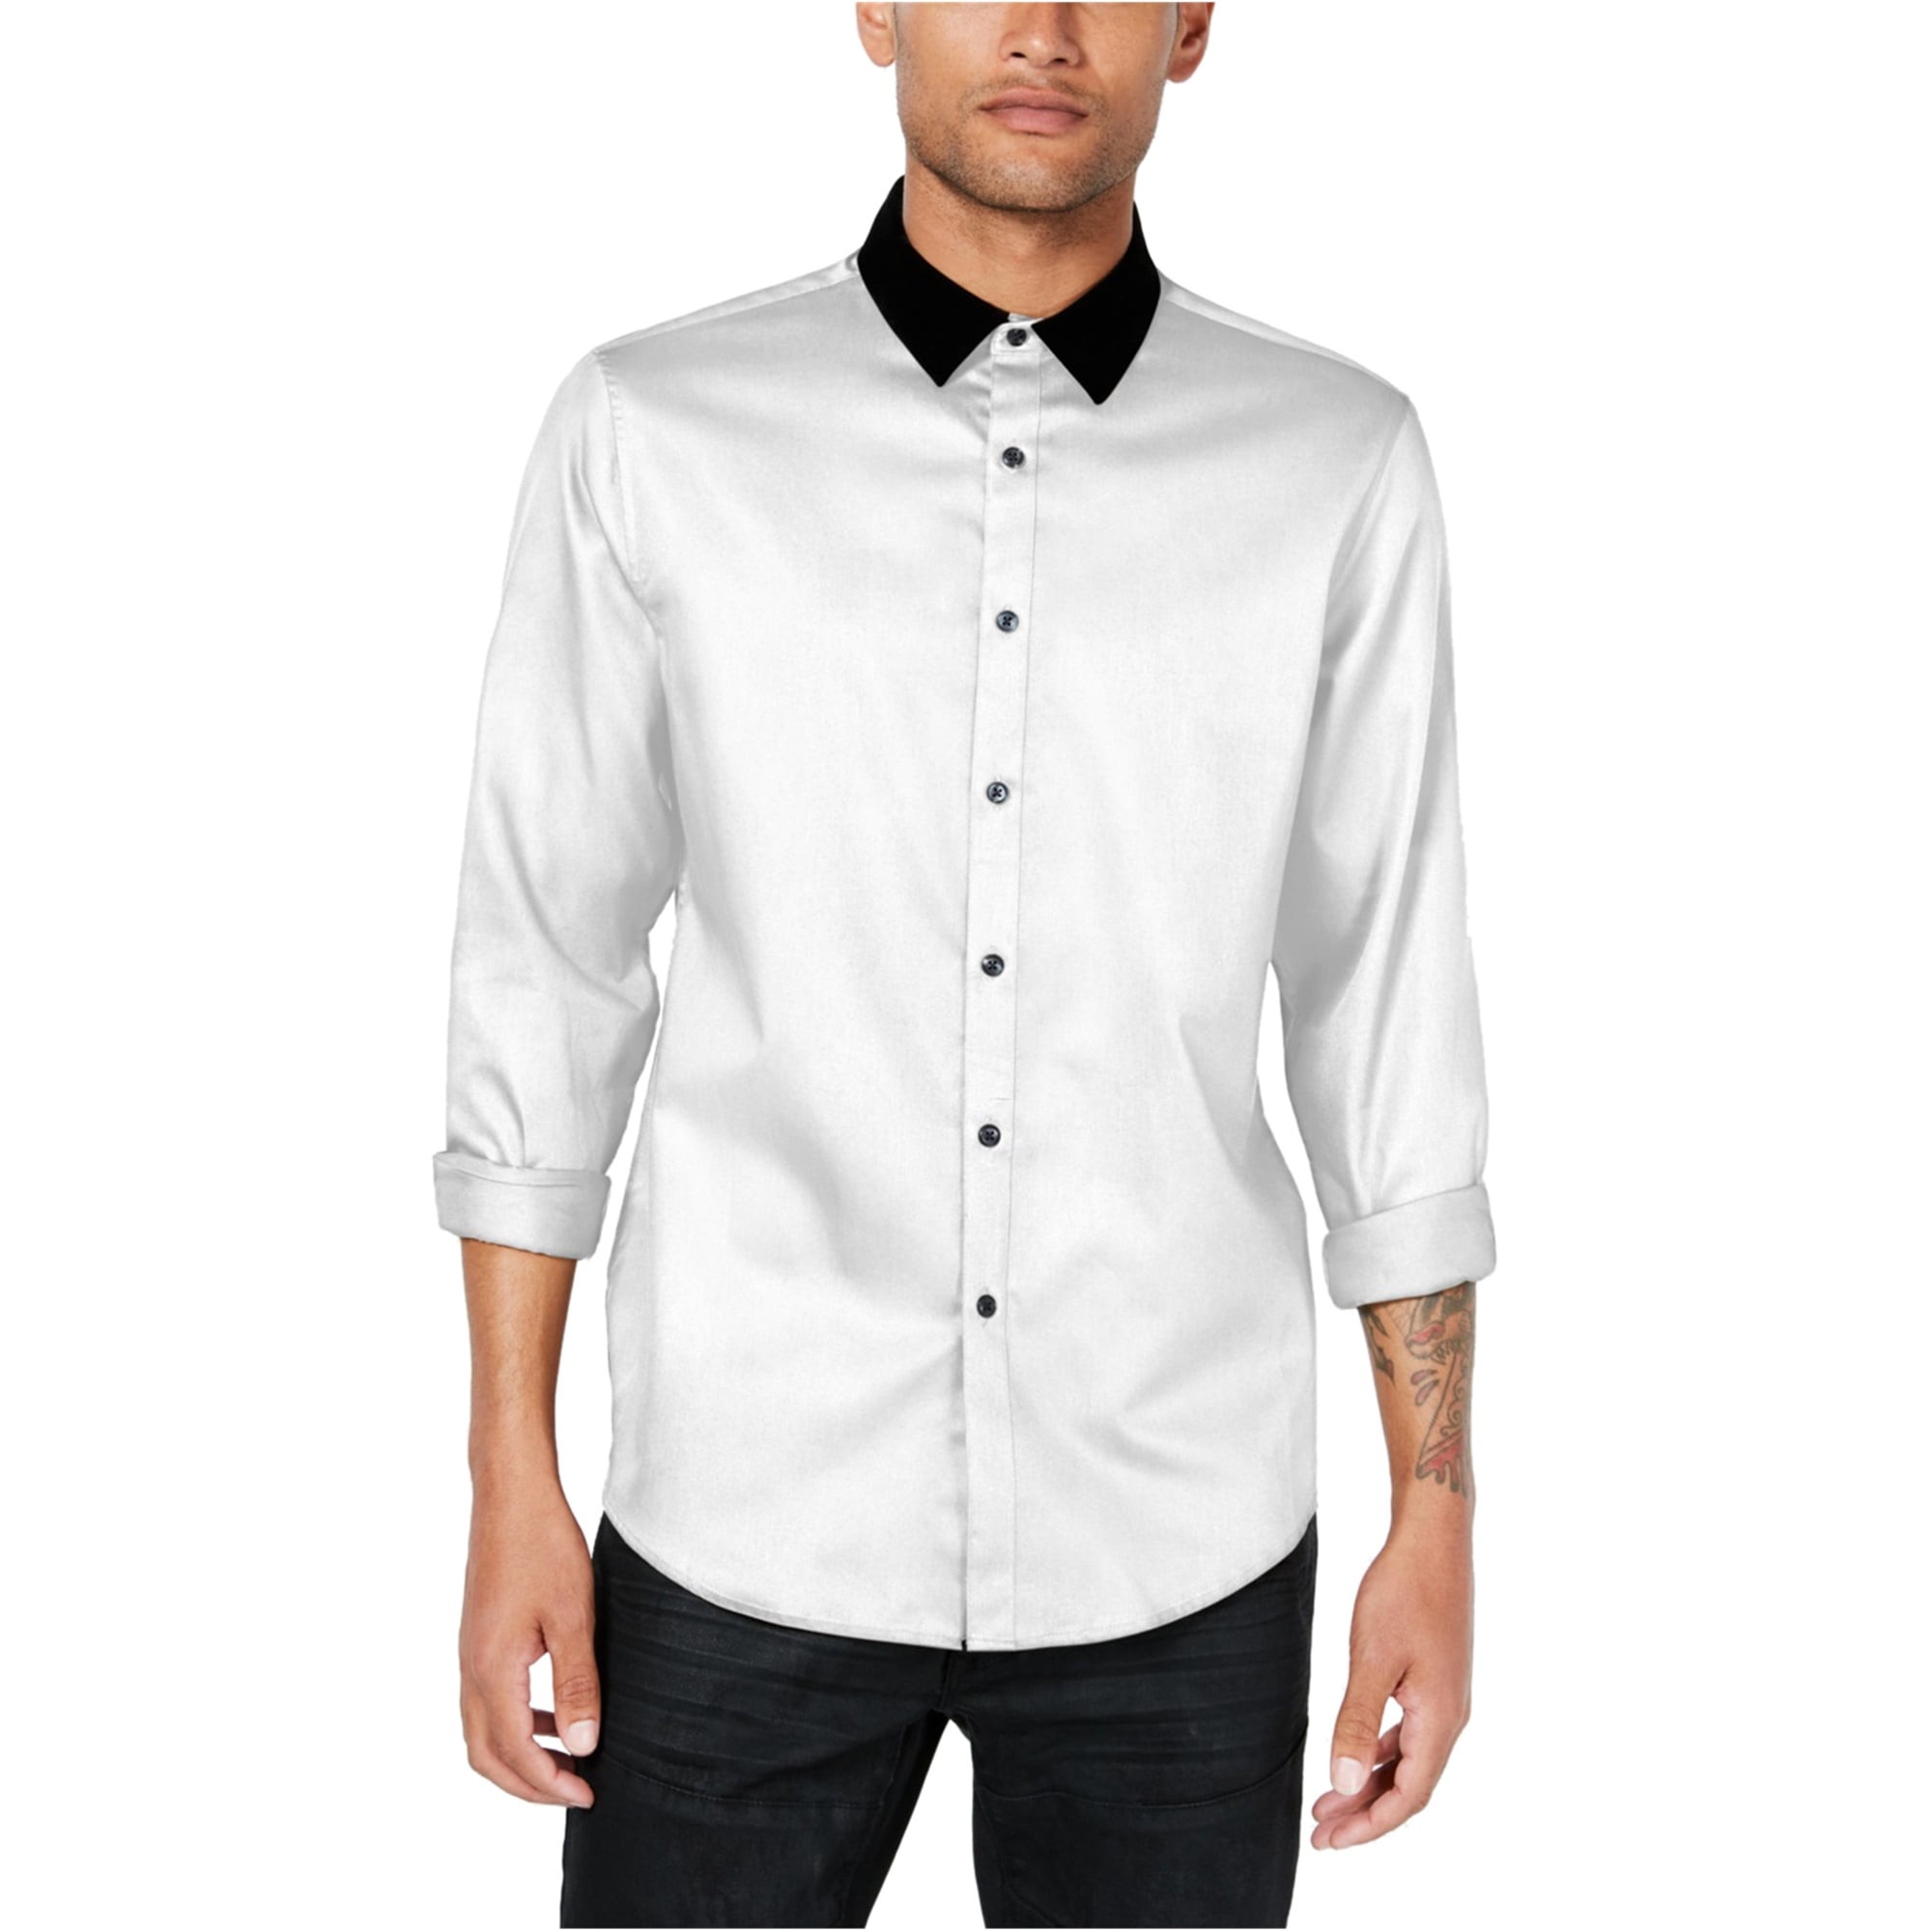 WSPLYSPJY Mens Slim Fit Velvet Dress Shirts Casual Button Down Long Sleeve Shirt 